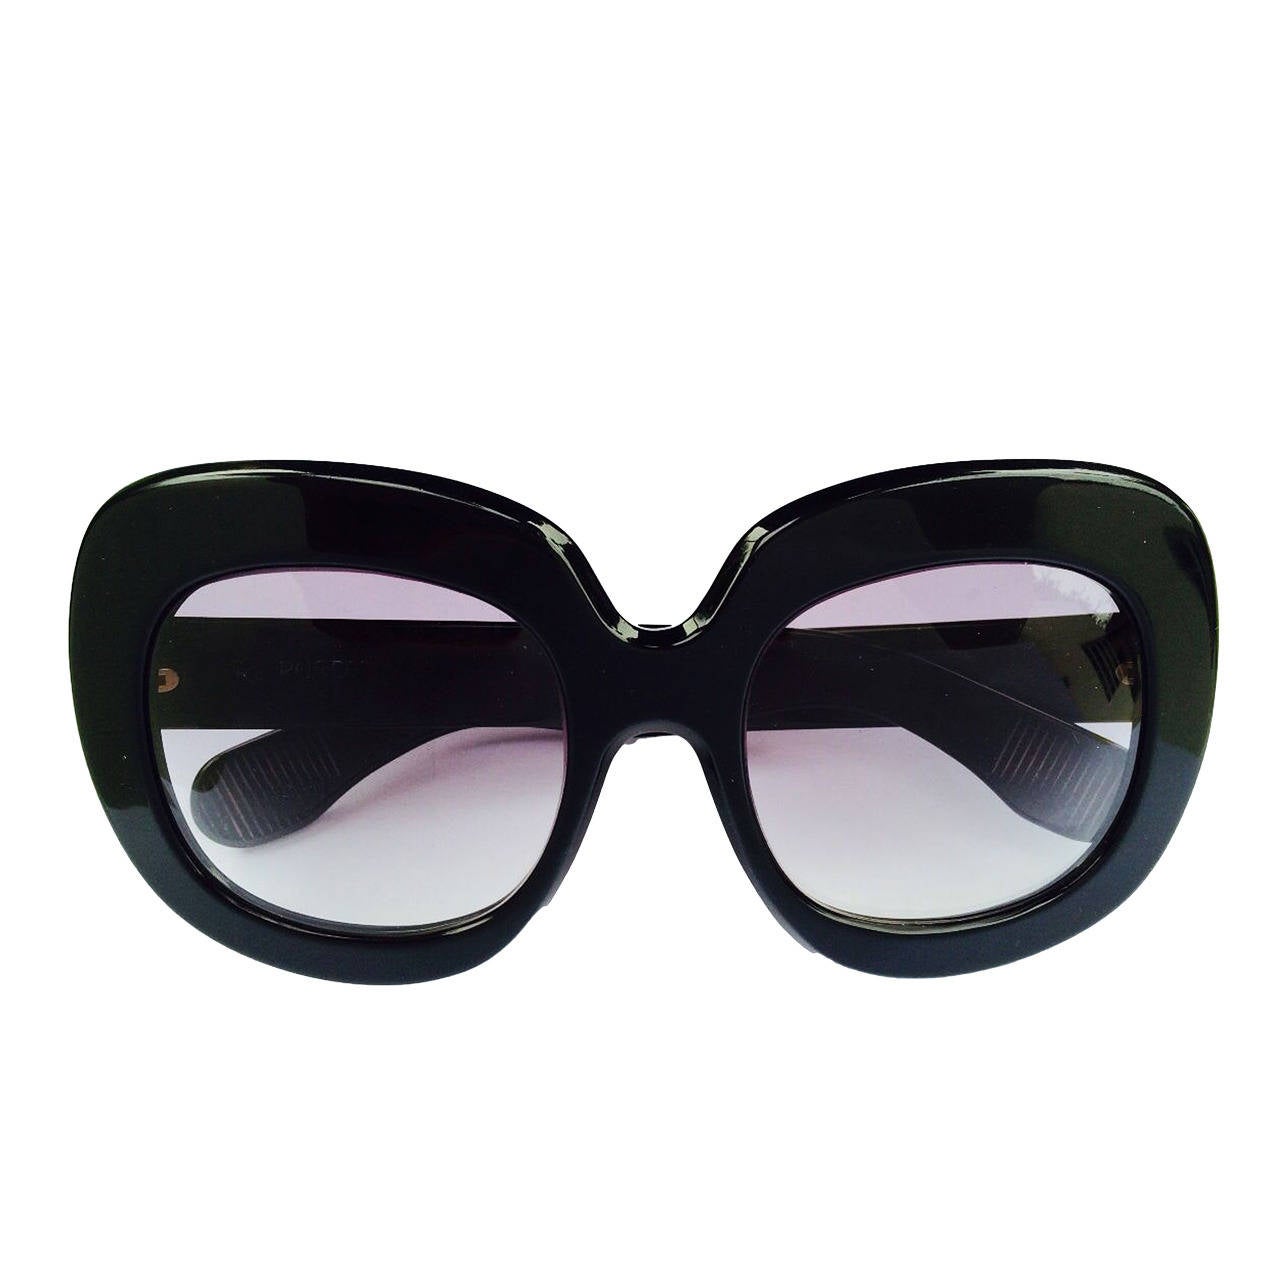 Oversize Lucite Sunglasses 1970s